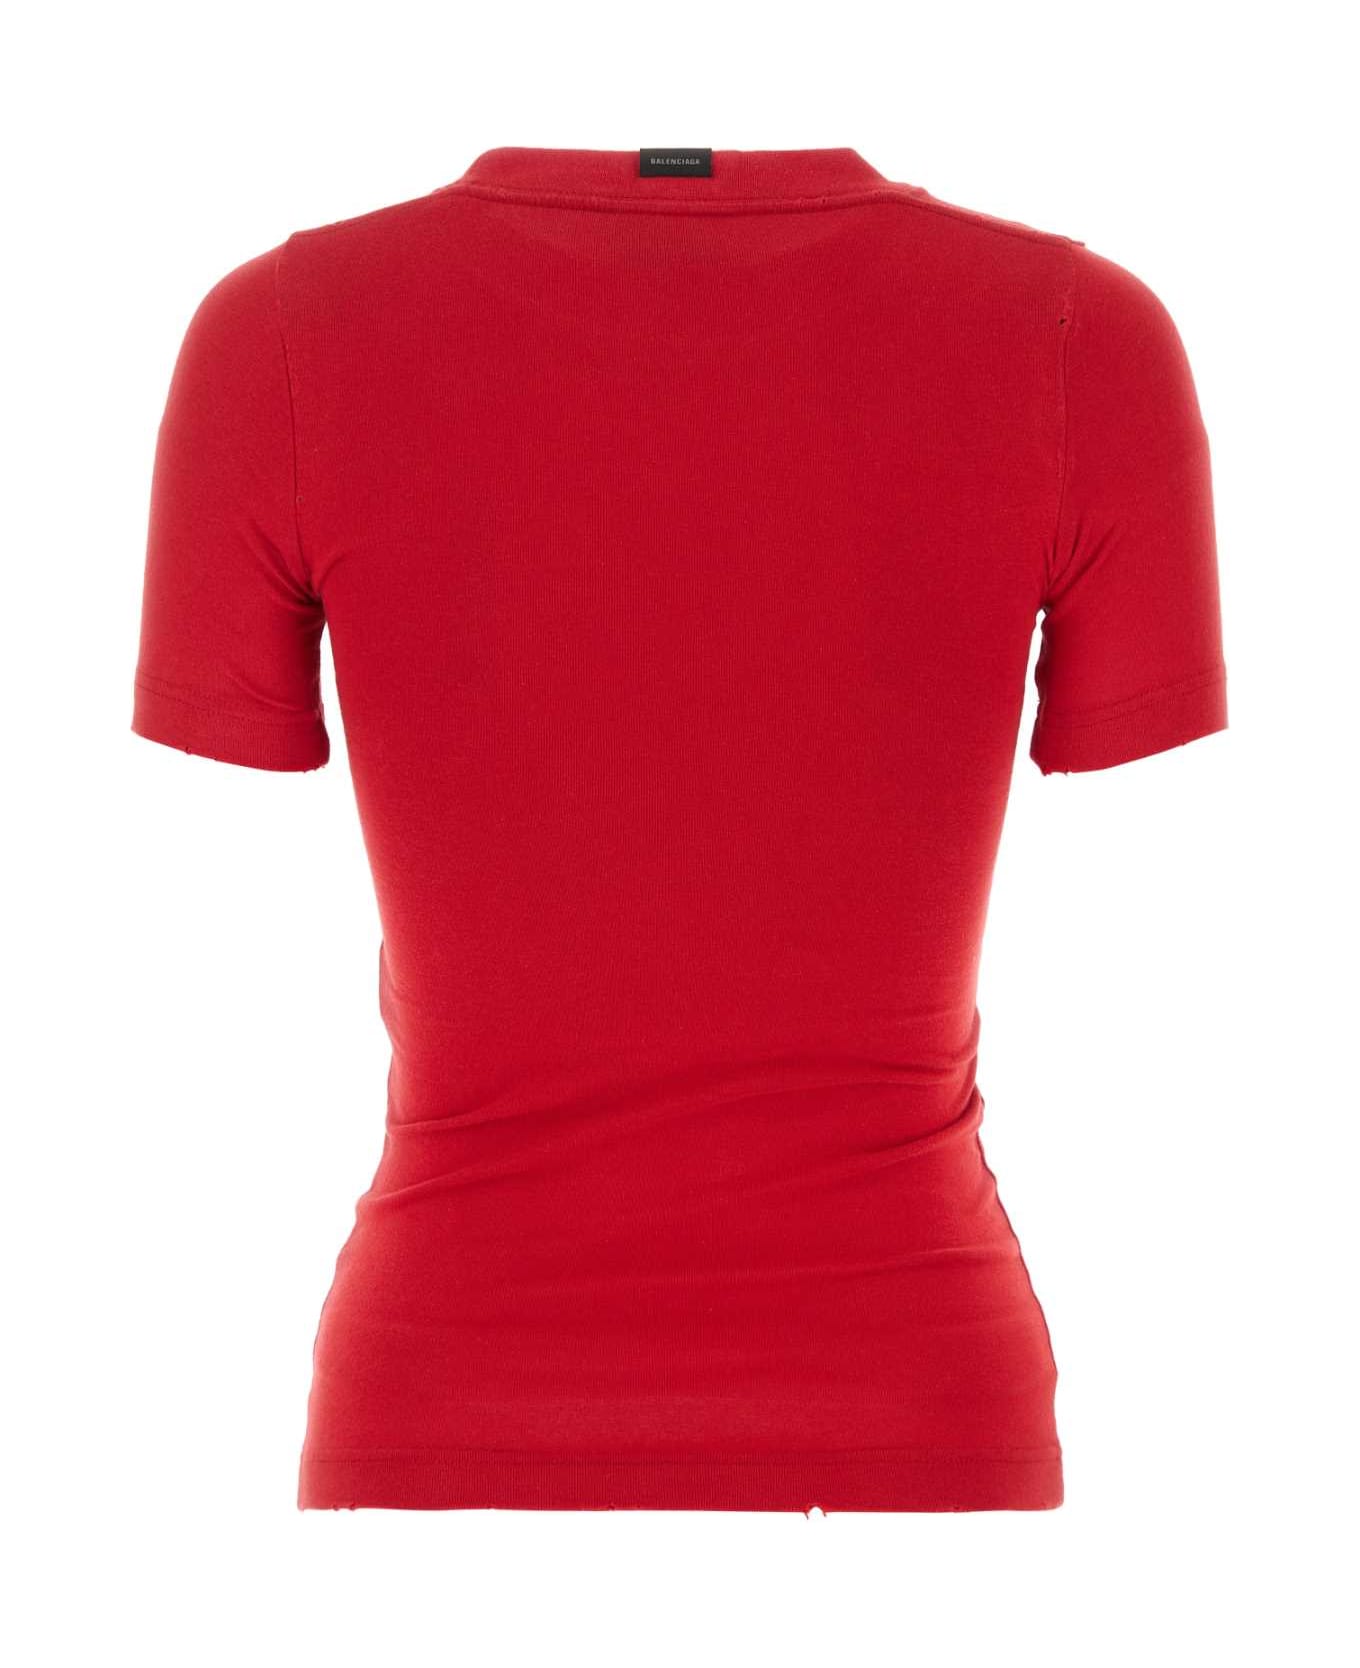 Balenciaga Red Cotton T-shirt - FADEDRED